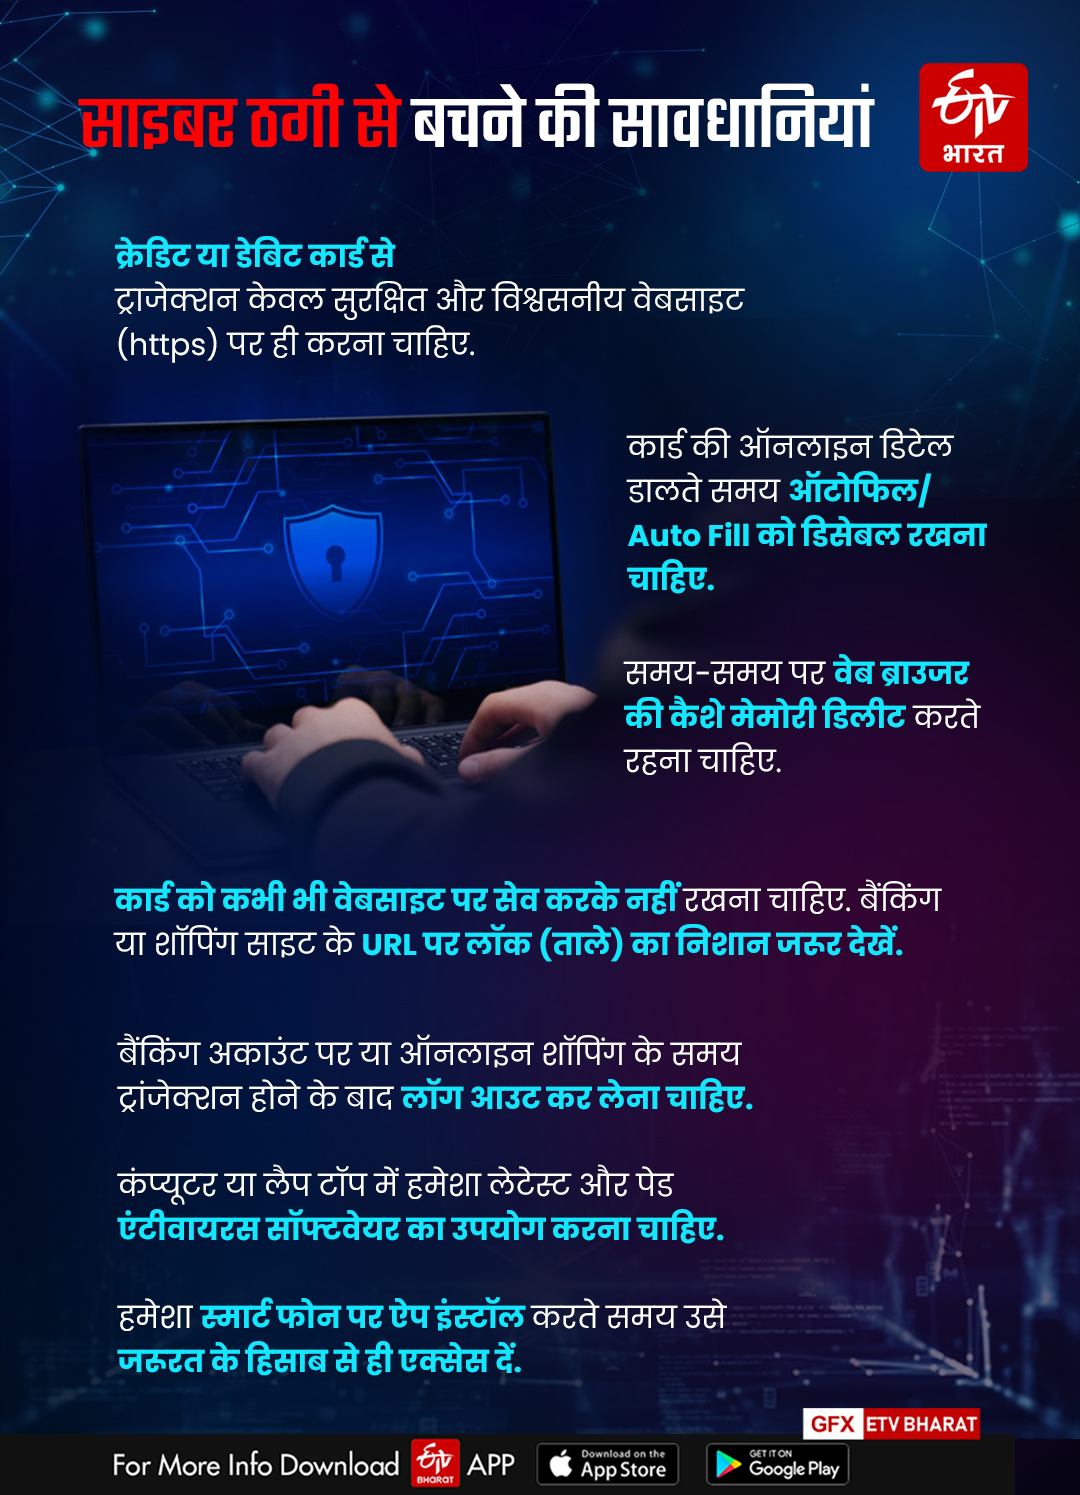 How to avoid cyber frauds